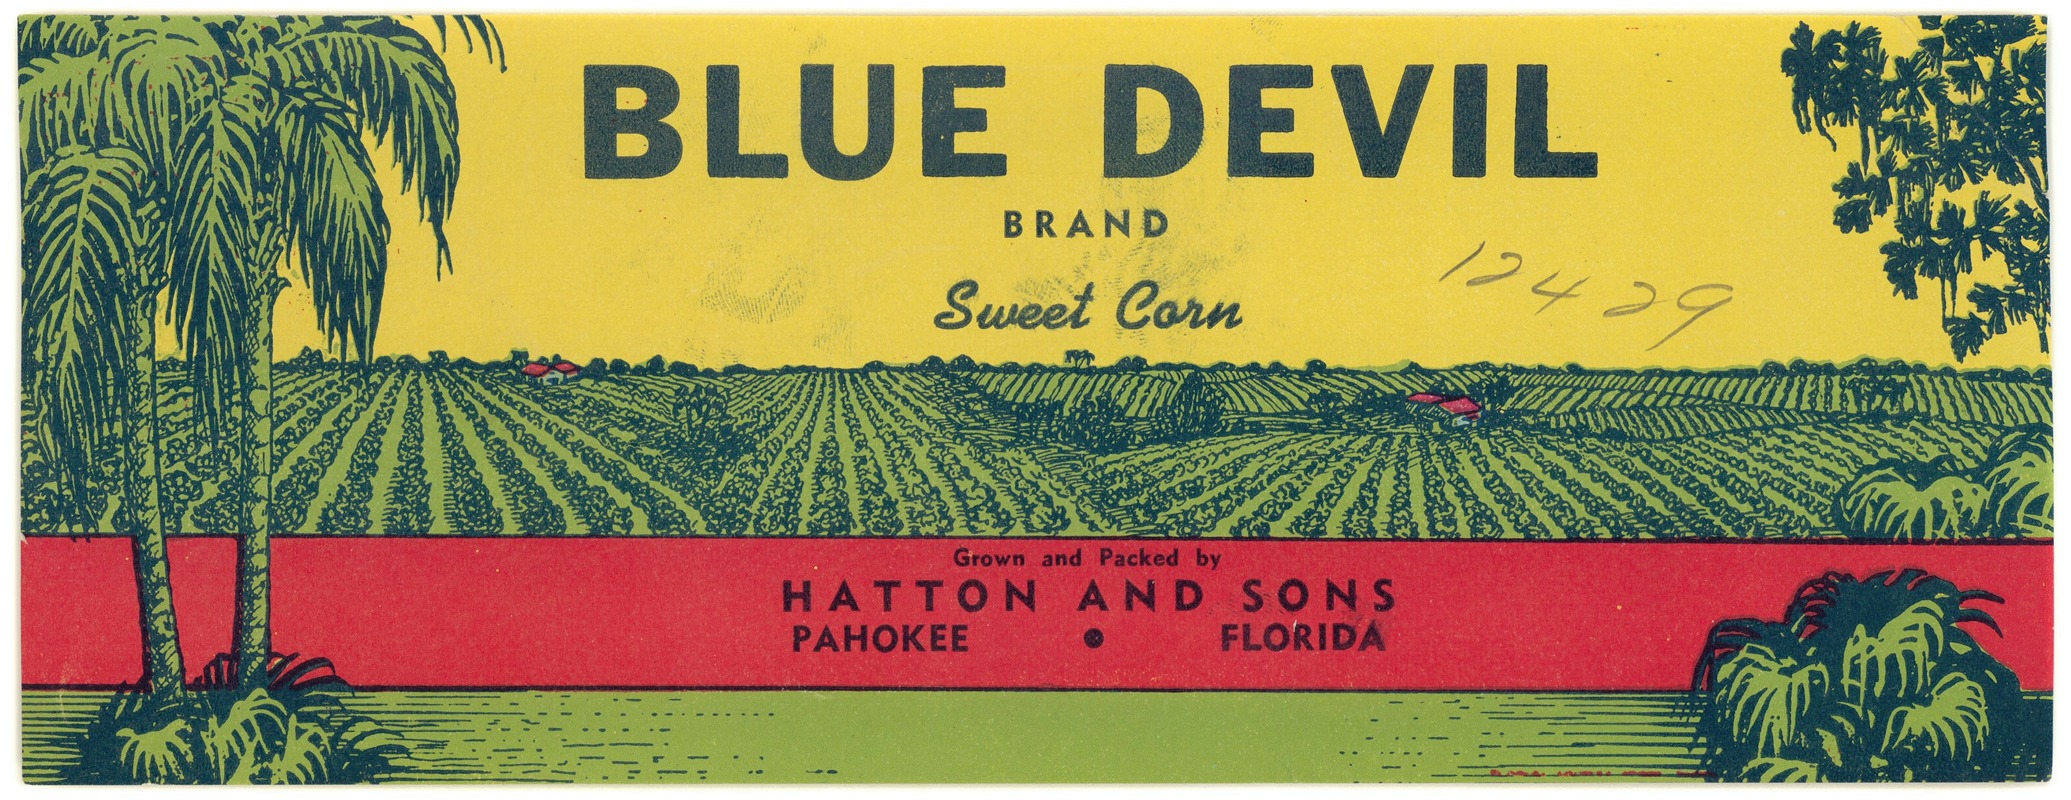 Anonymous - Blue Devil Brand Sweet Corn Label